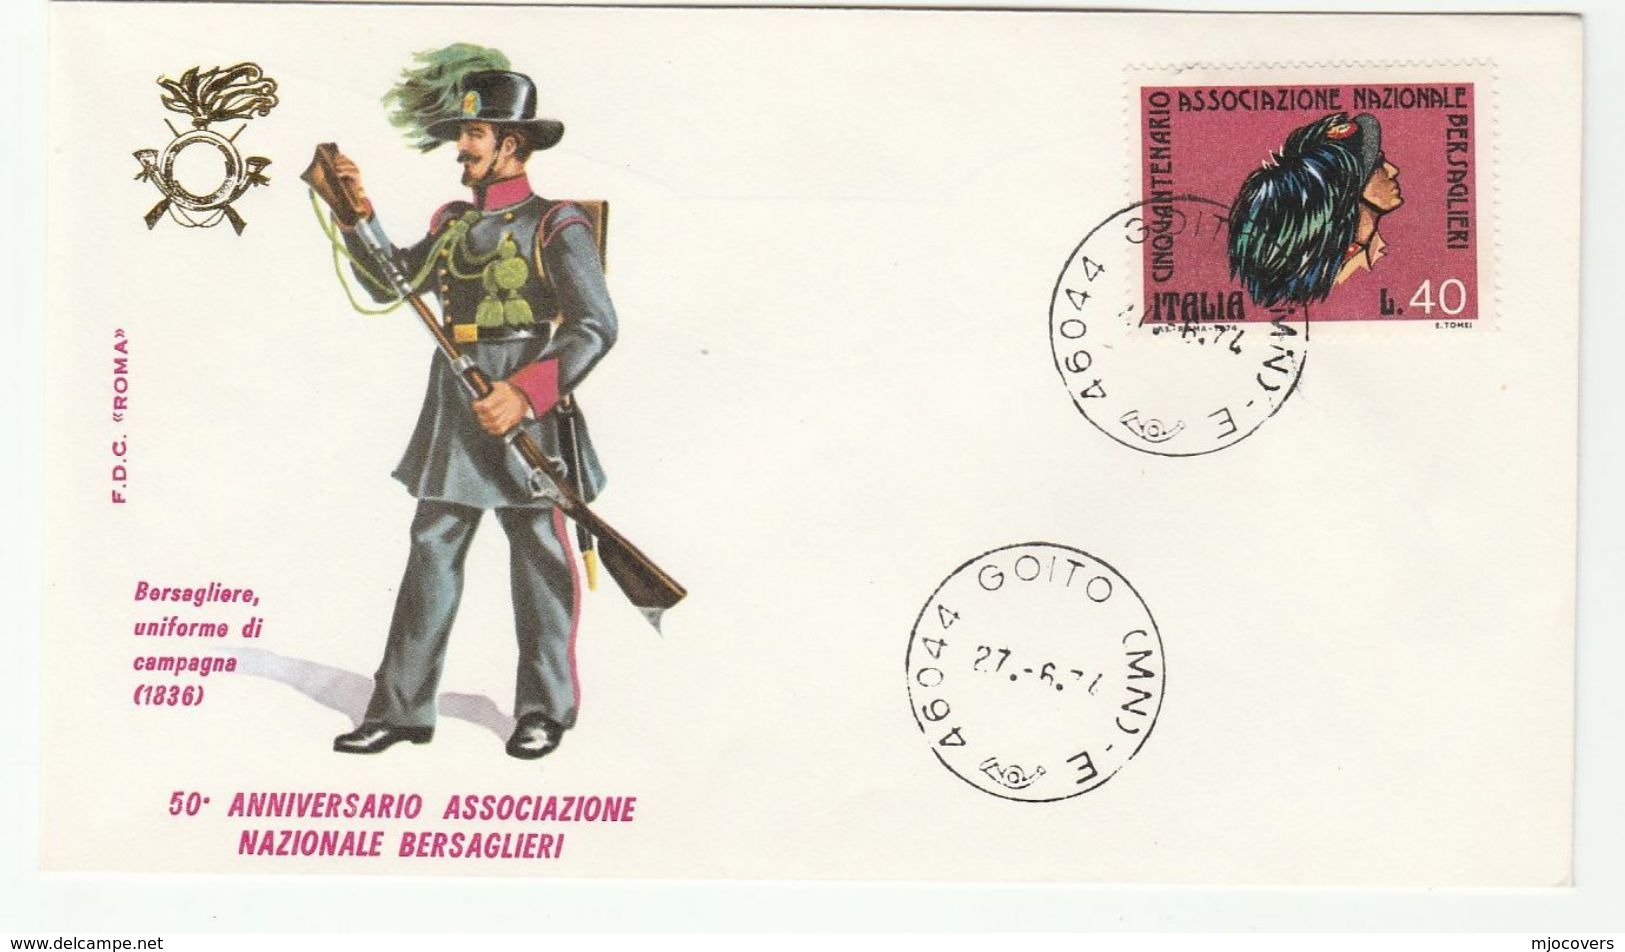 1974 Goito ITALY FDC BERSAGLIERI Army 1836 UNIFORM , GUN, Cover Military Forces Stamps - Militaria